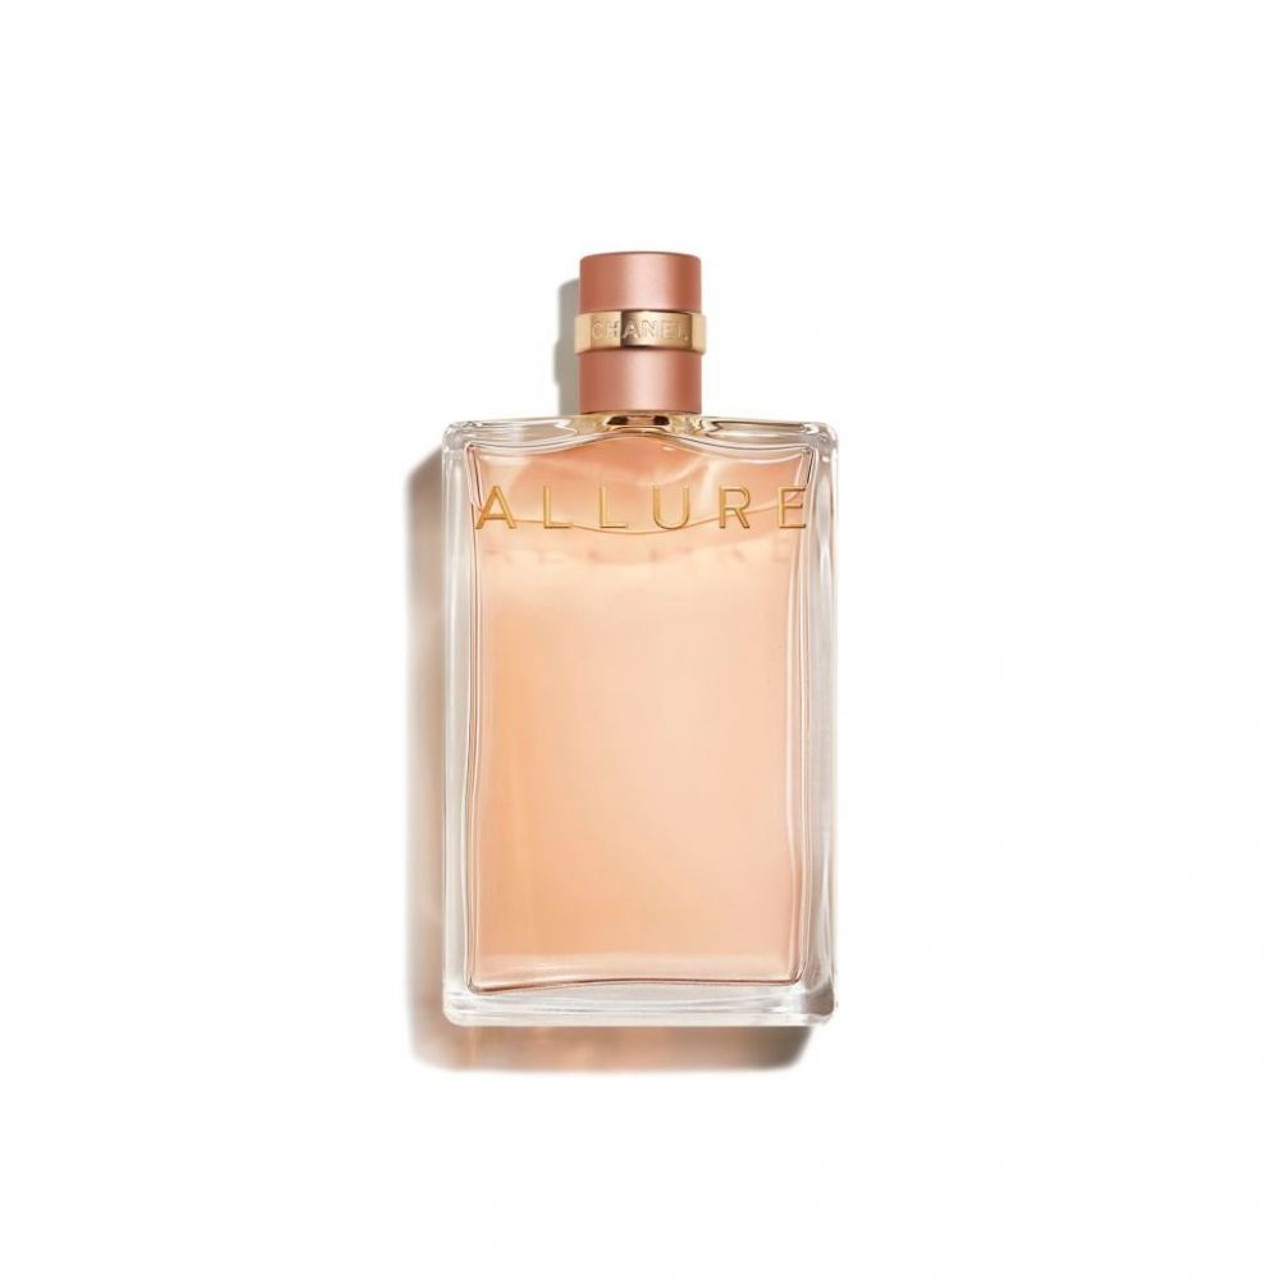 N°5 Fragrance Collection - The N°5 EAU PREMIÈRE - Fragrance